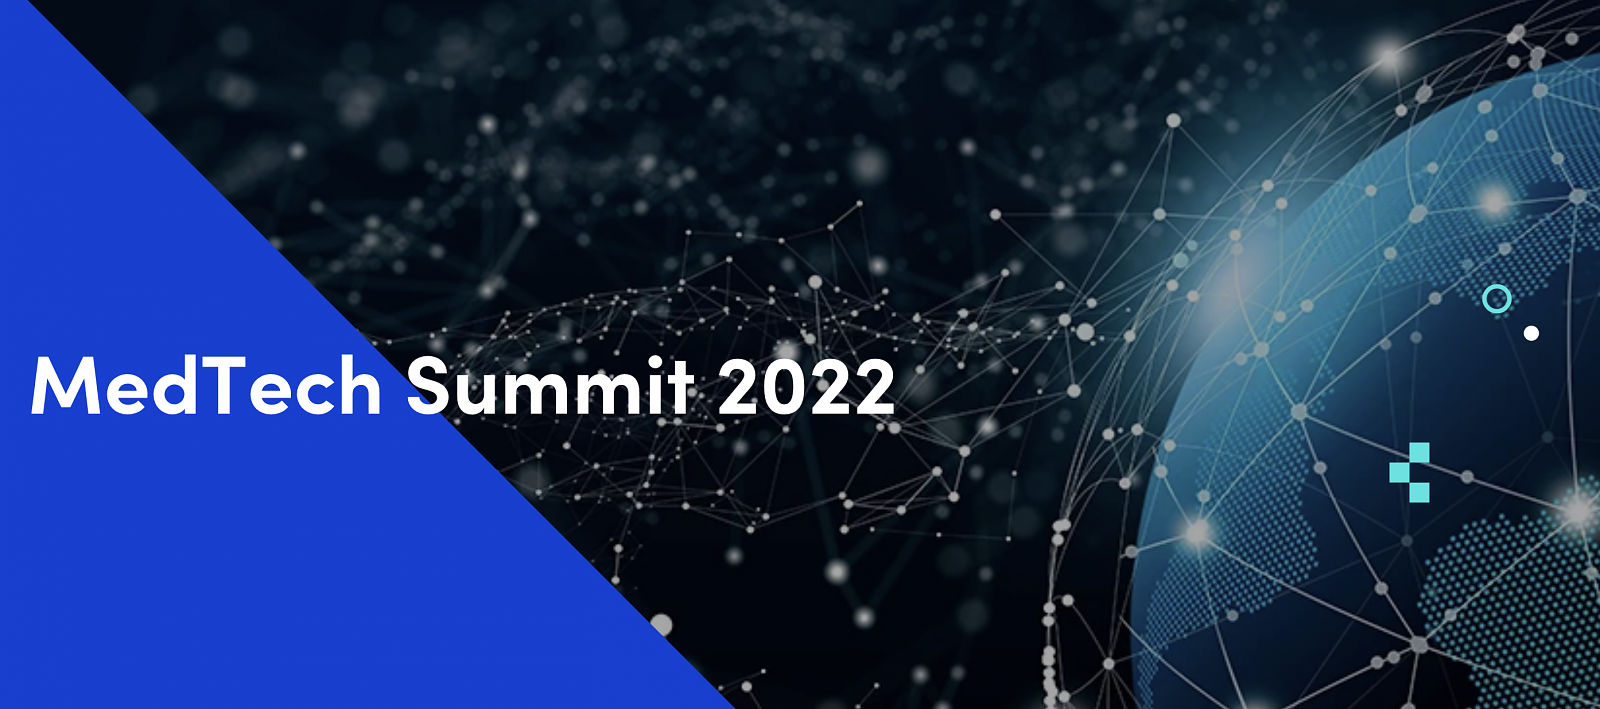 MedTech Summit 2022